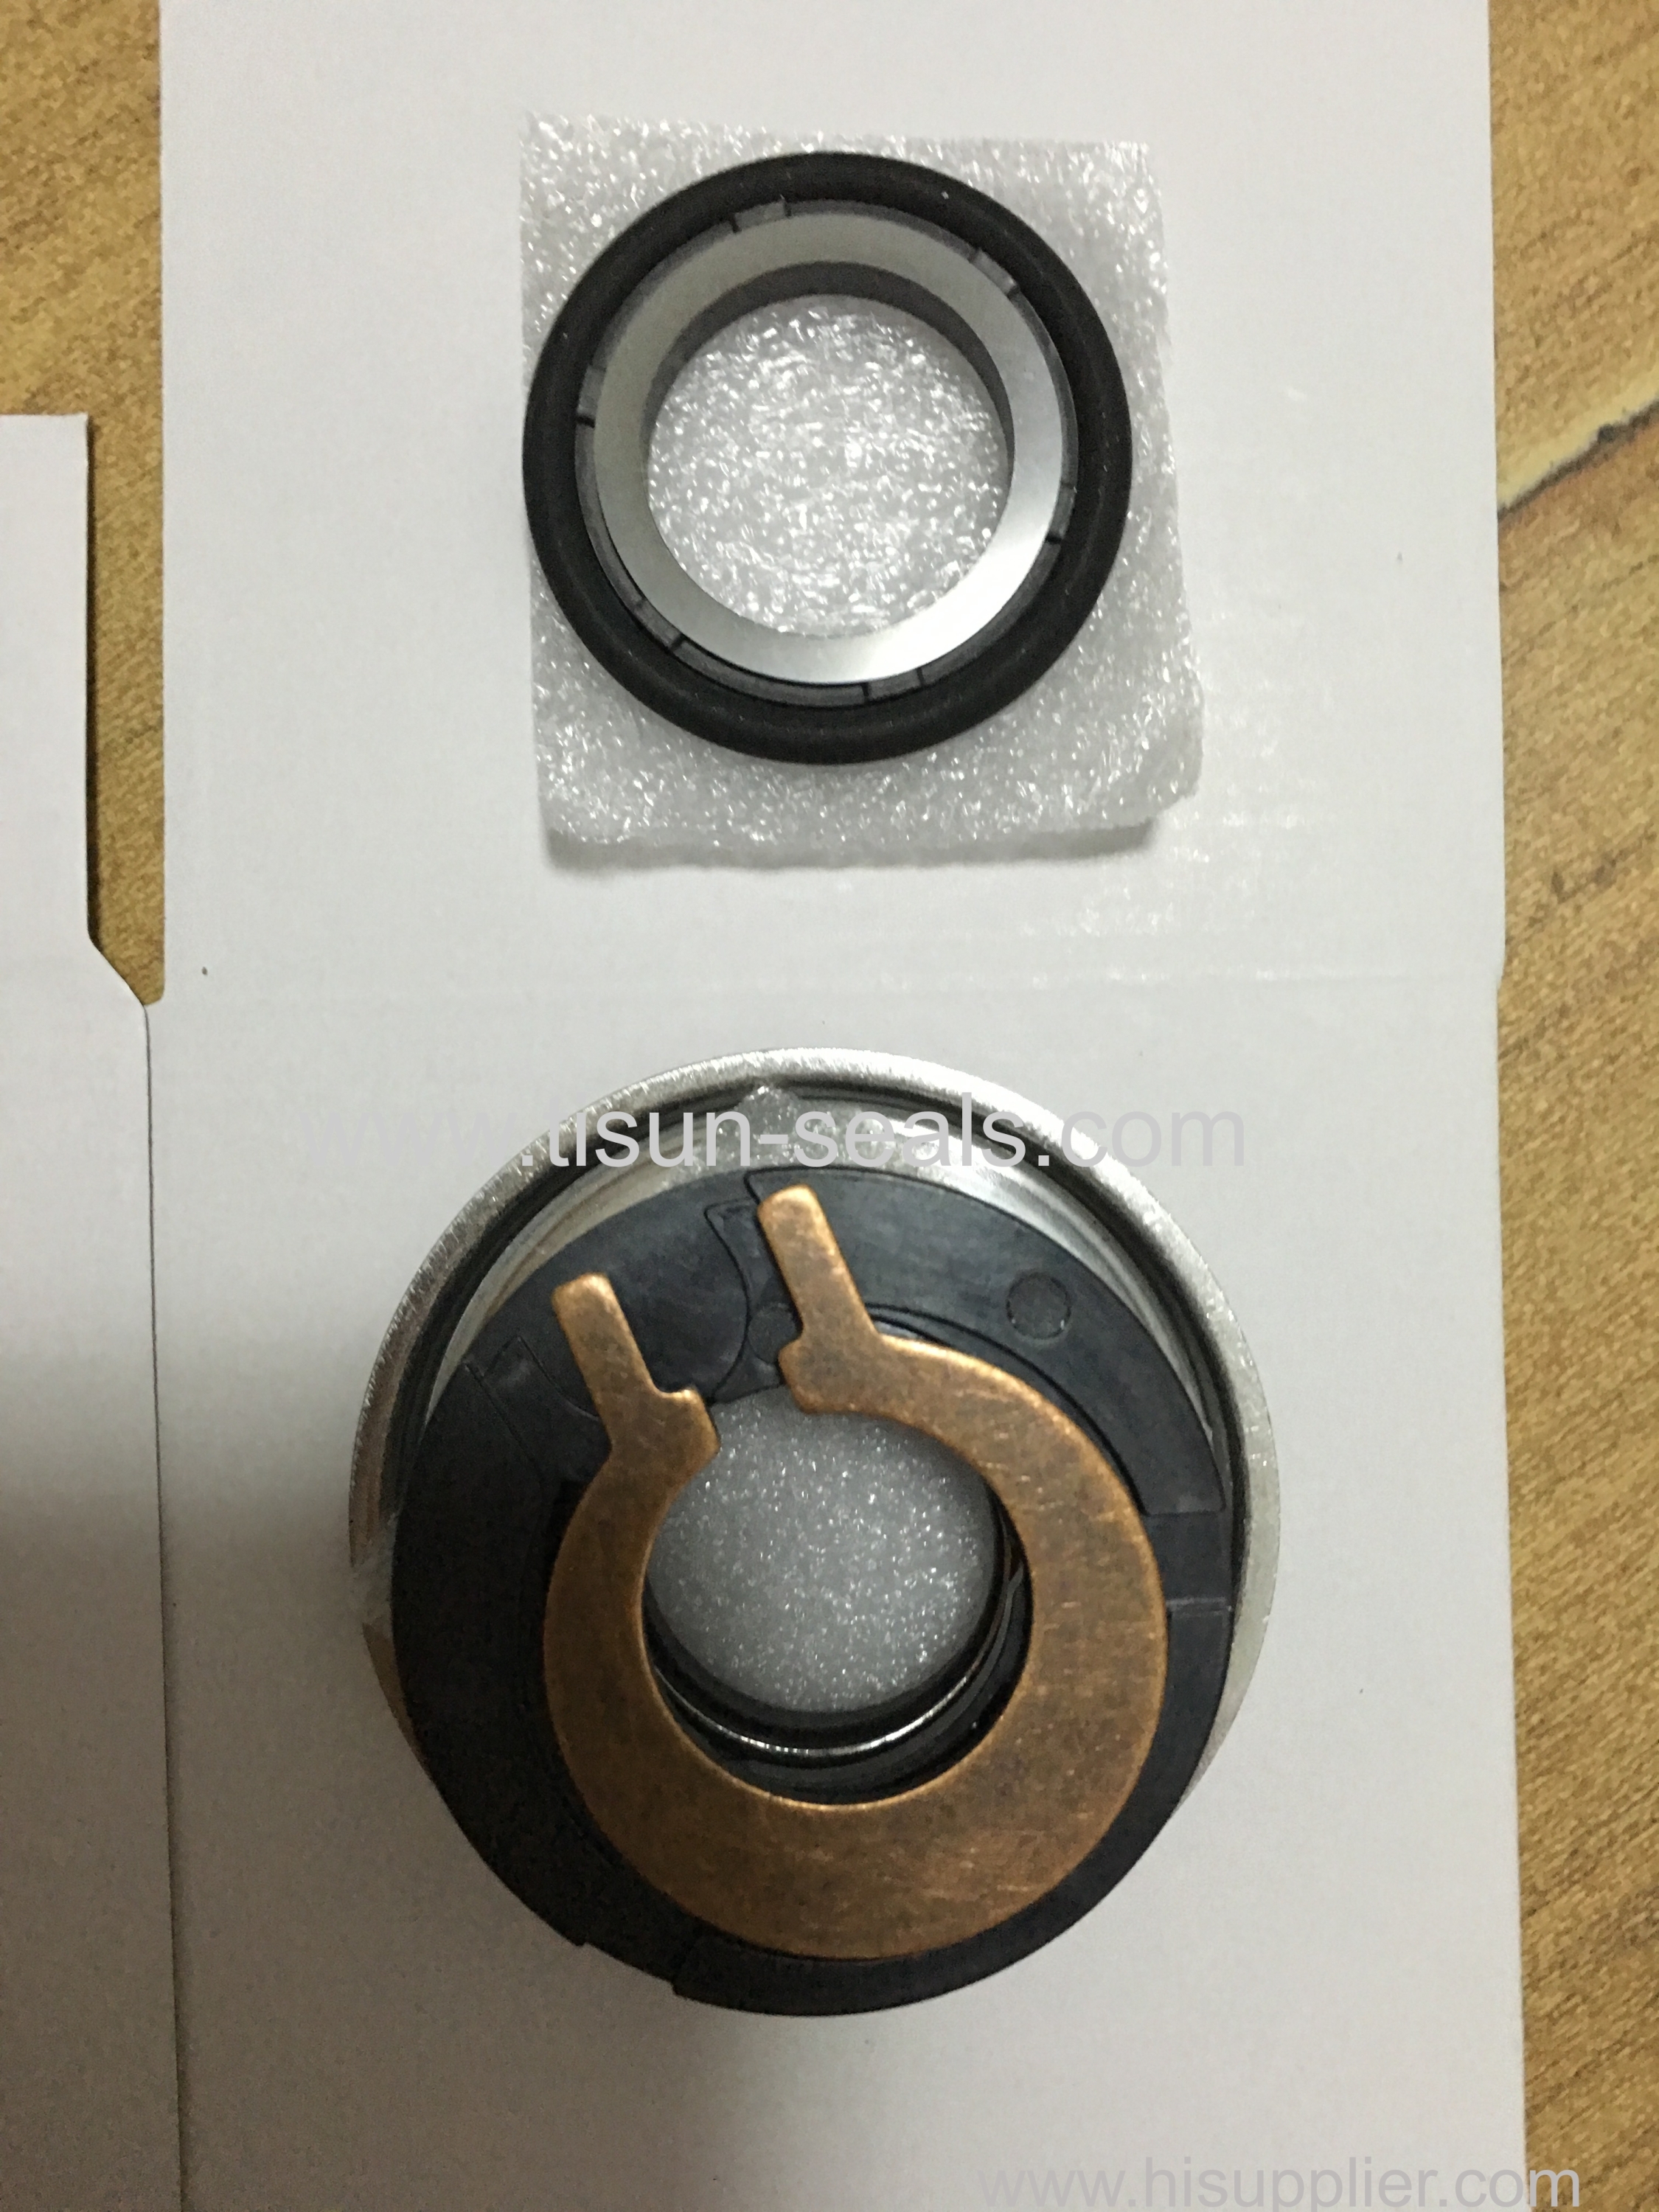 Mechanical seals feature